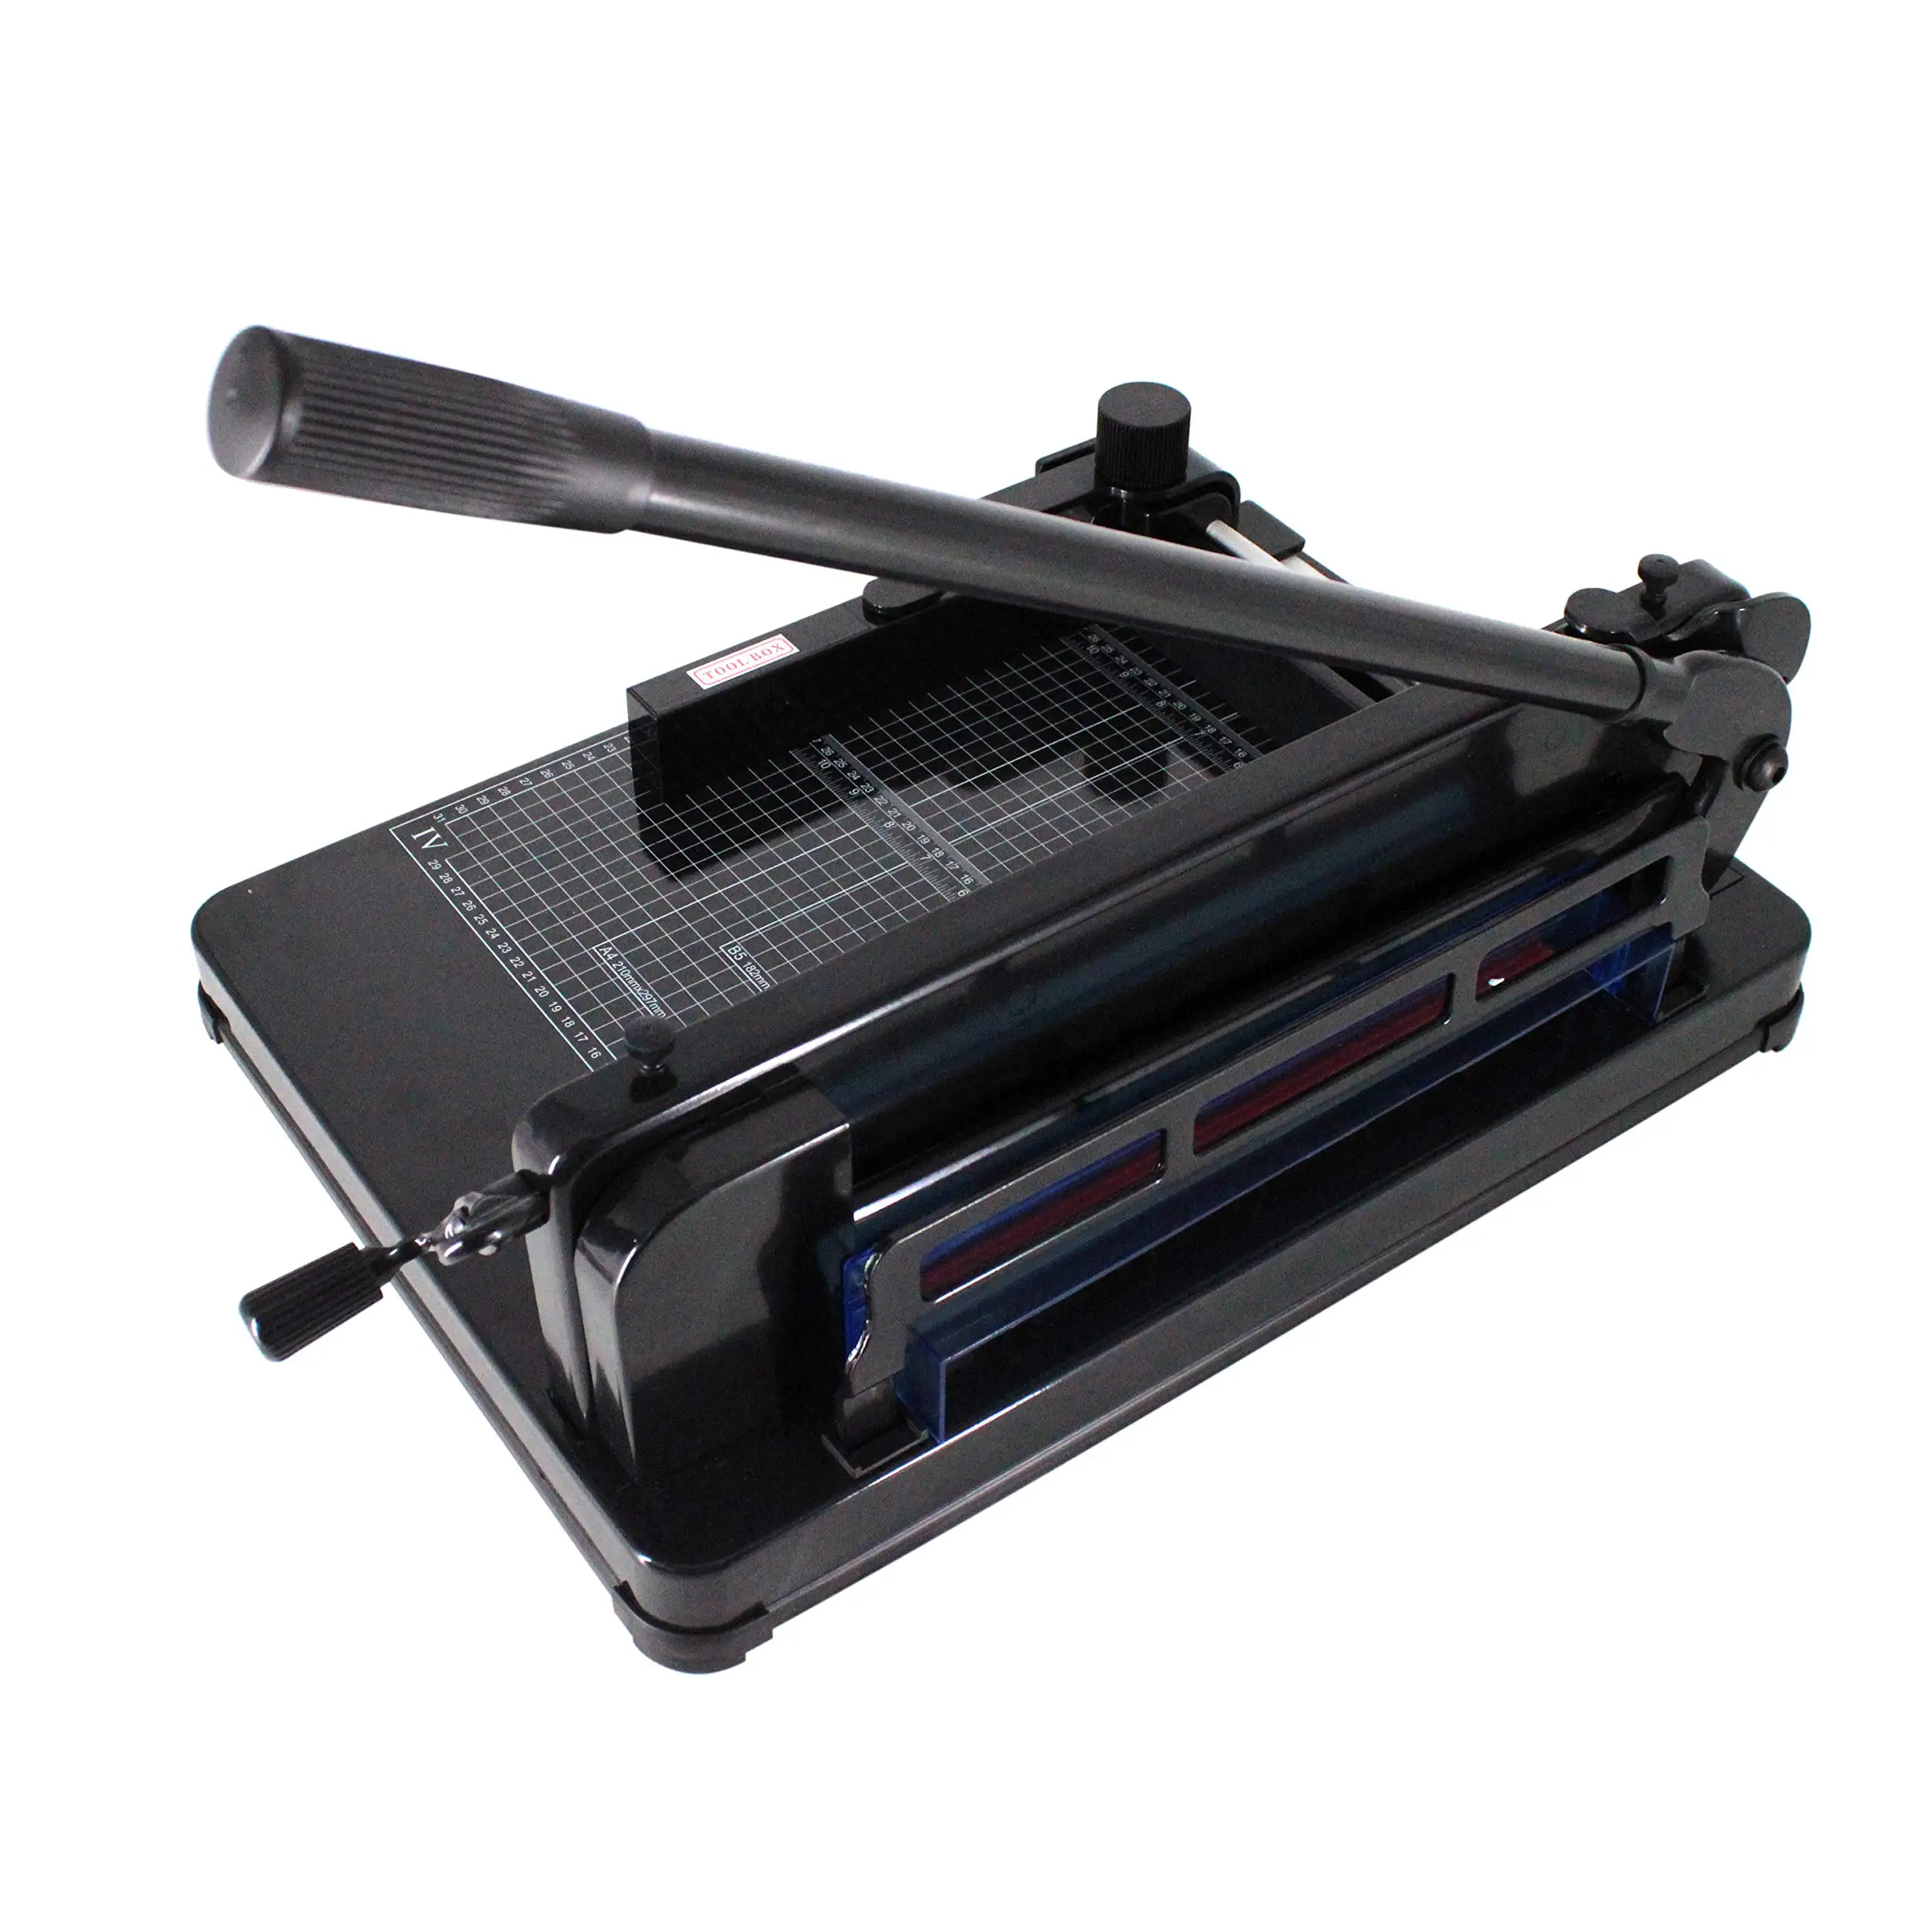 Black Heavy Duty Paper Cutter, A4 Paper Trimmer для School и Office Cutting, 12 В, New, 858